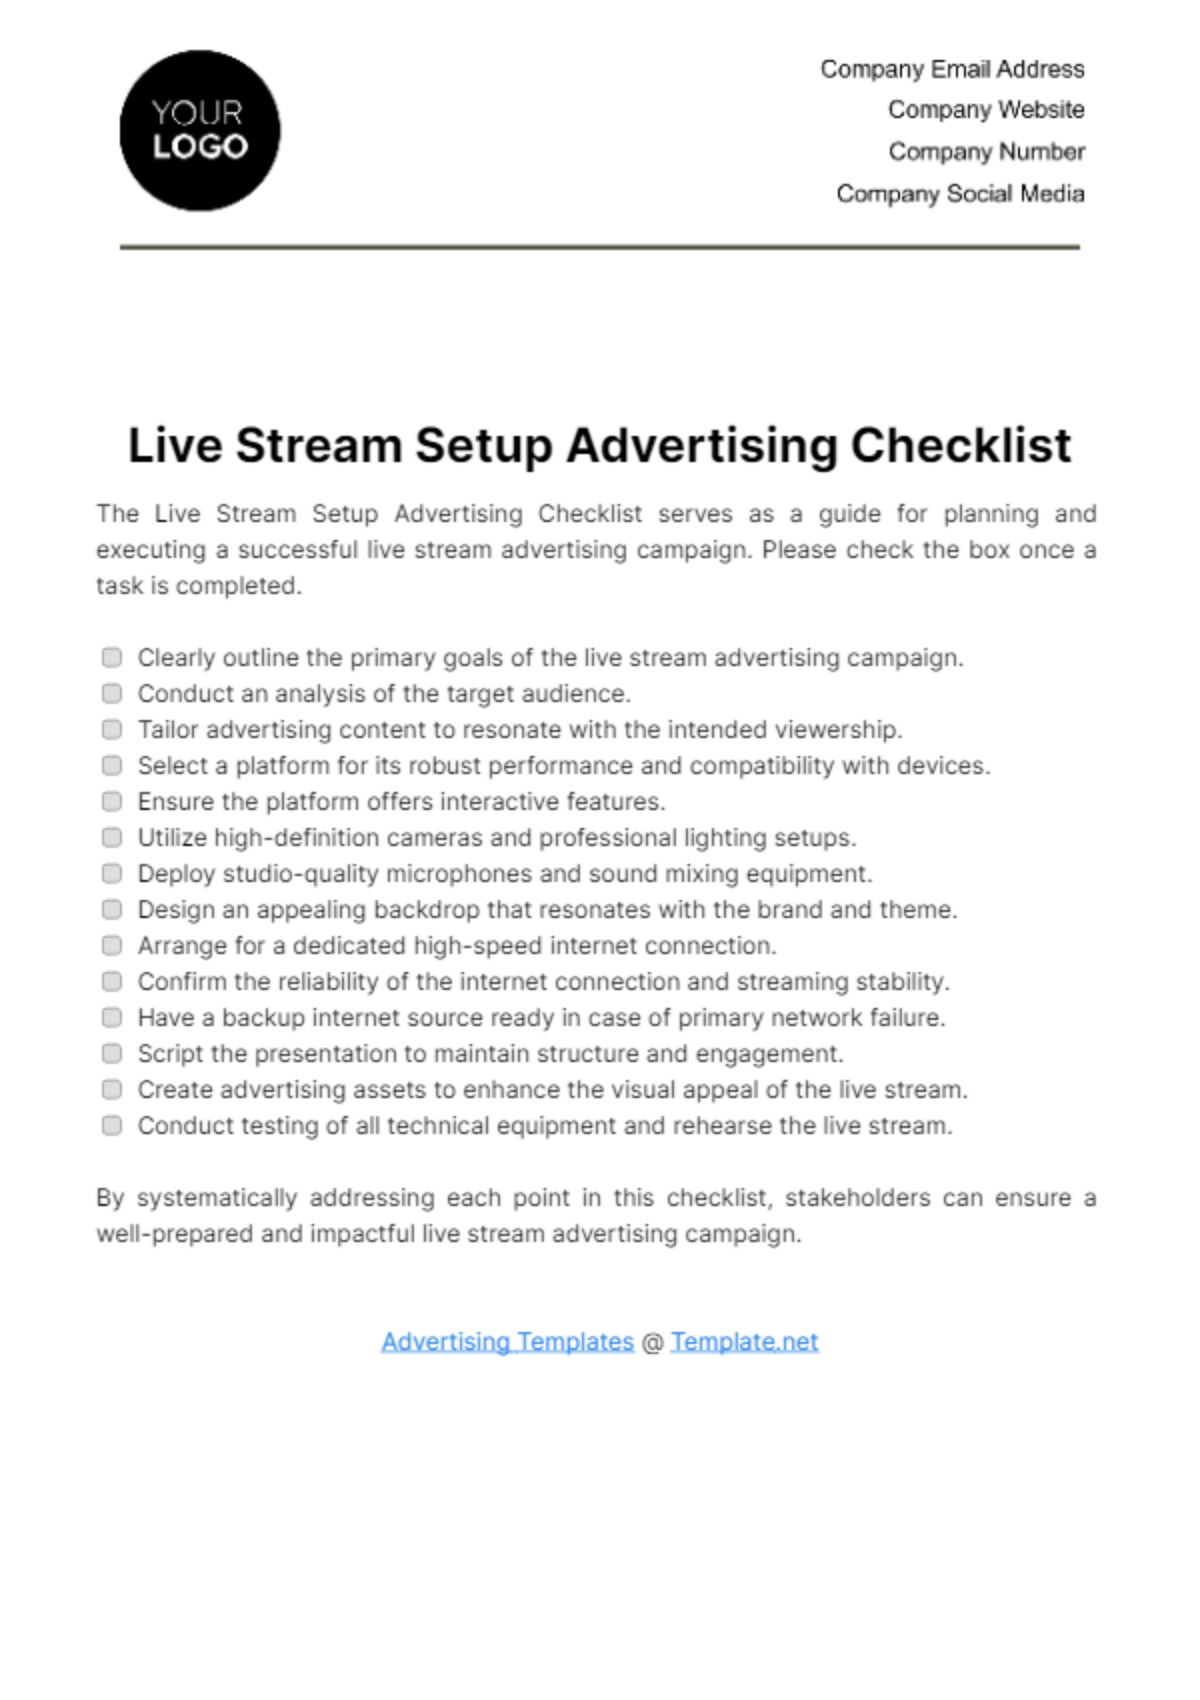 Live Stream Setup Advertising Checklist Template